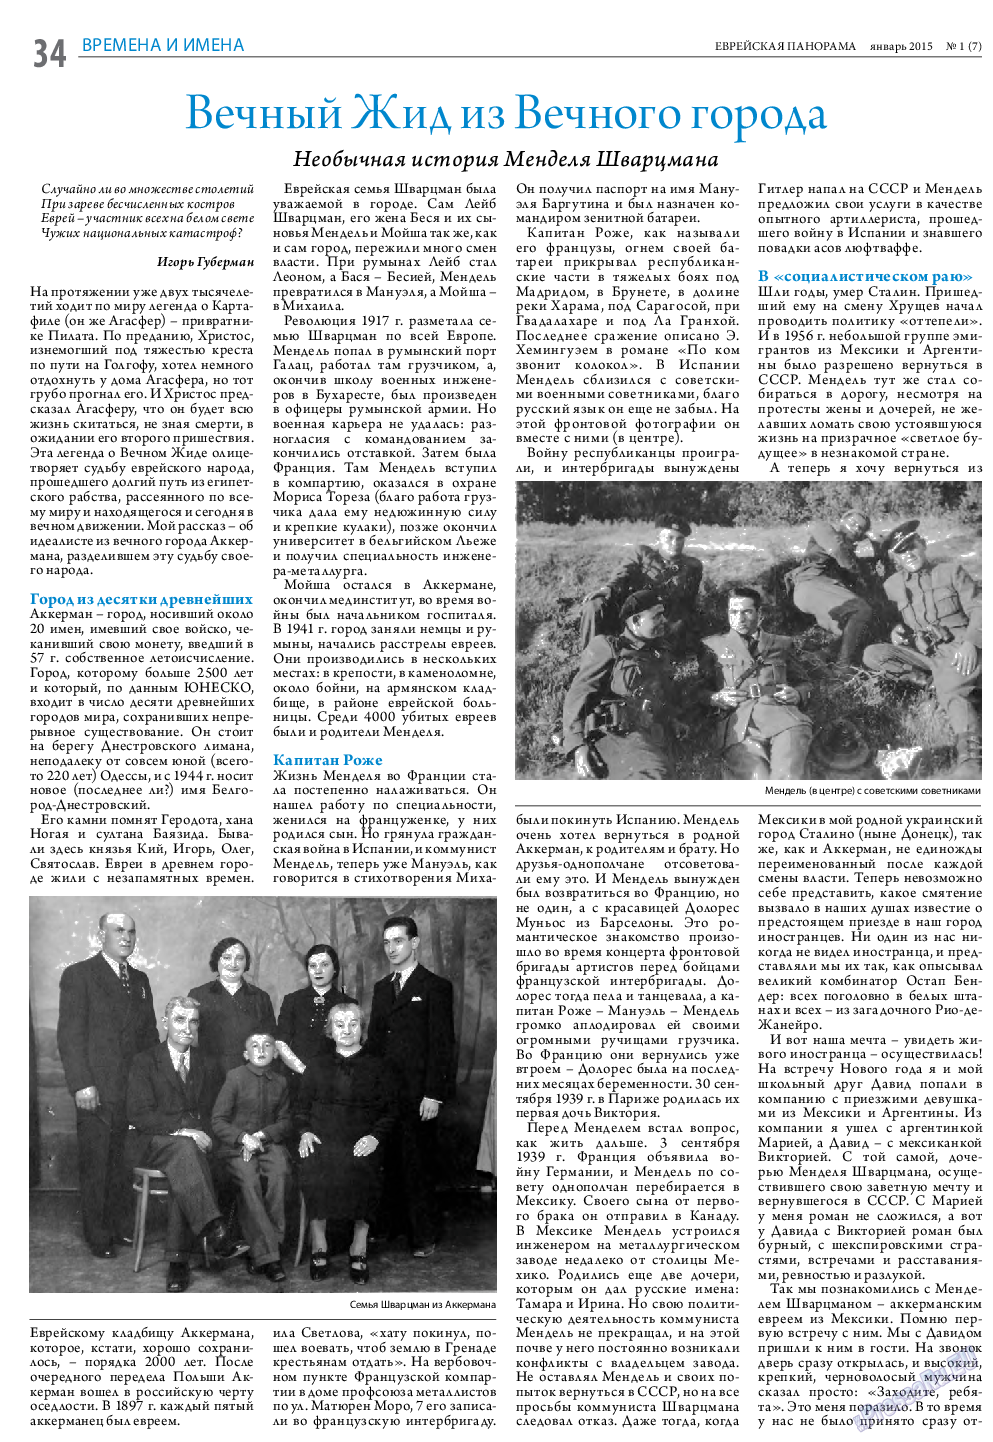 Еврейская панорама, газета. 2015 №1 стр.34